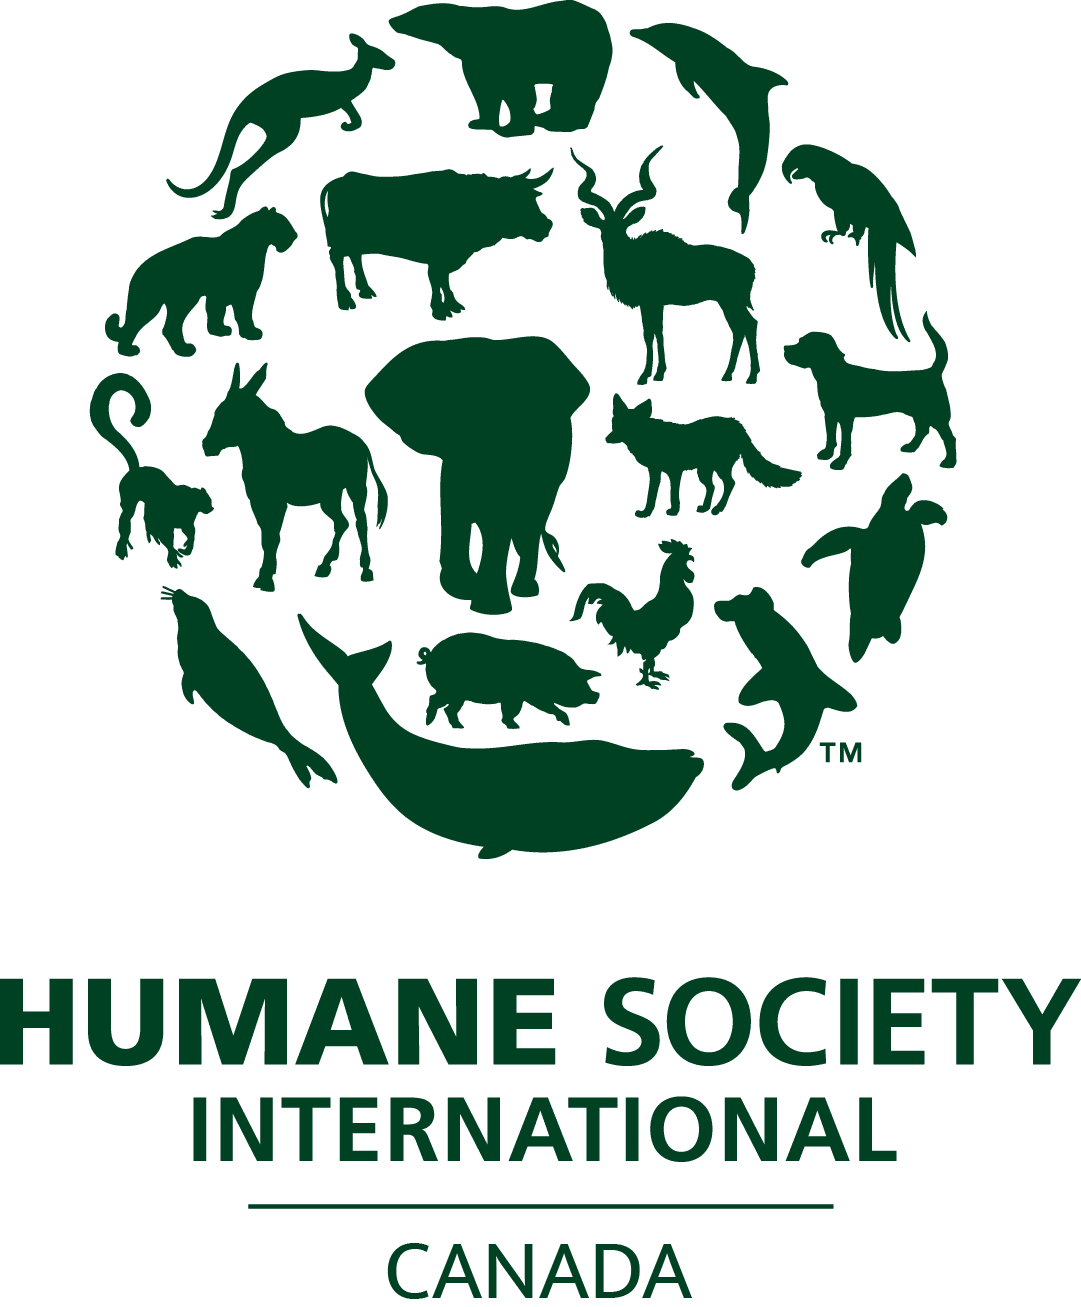 Humane Society International Canada logo